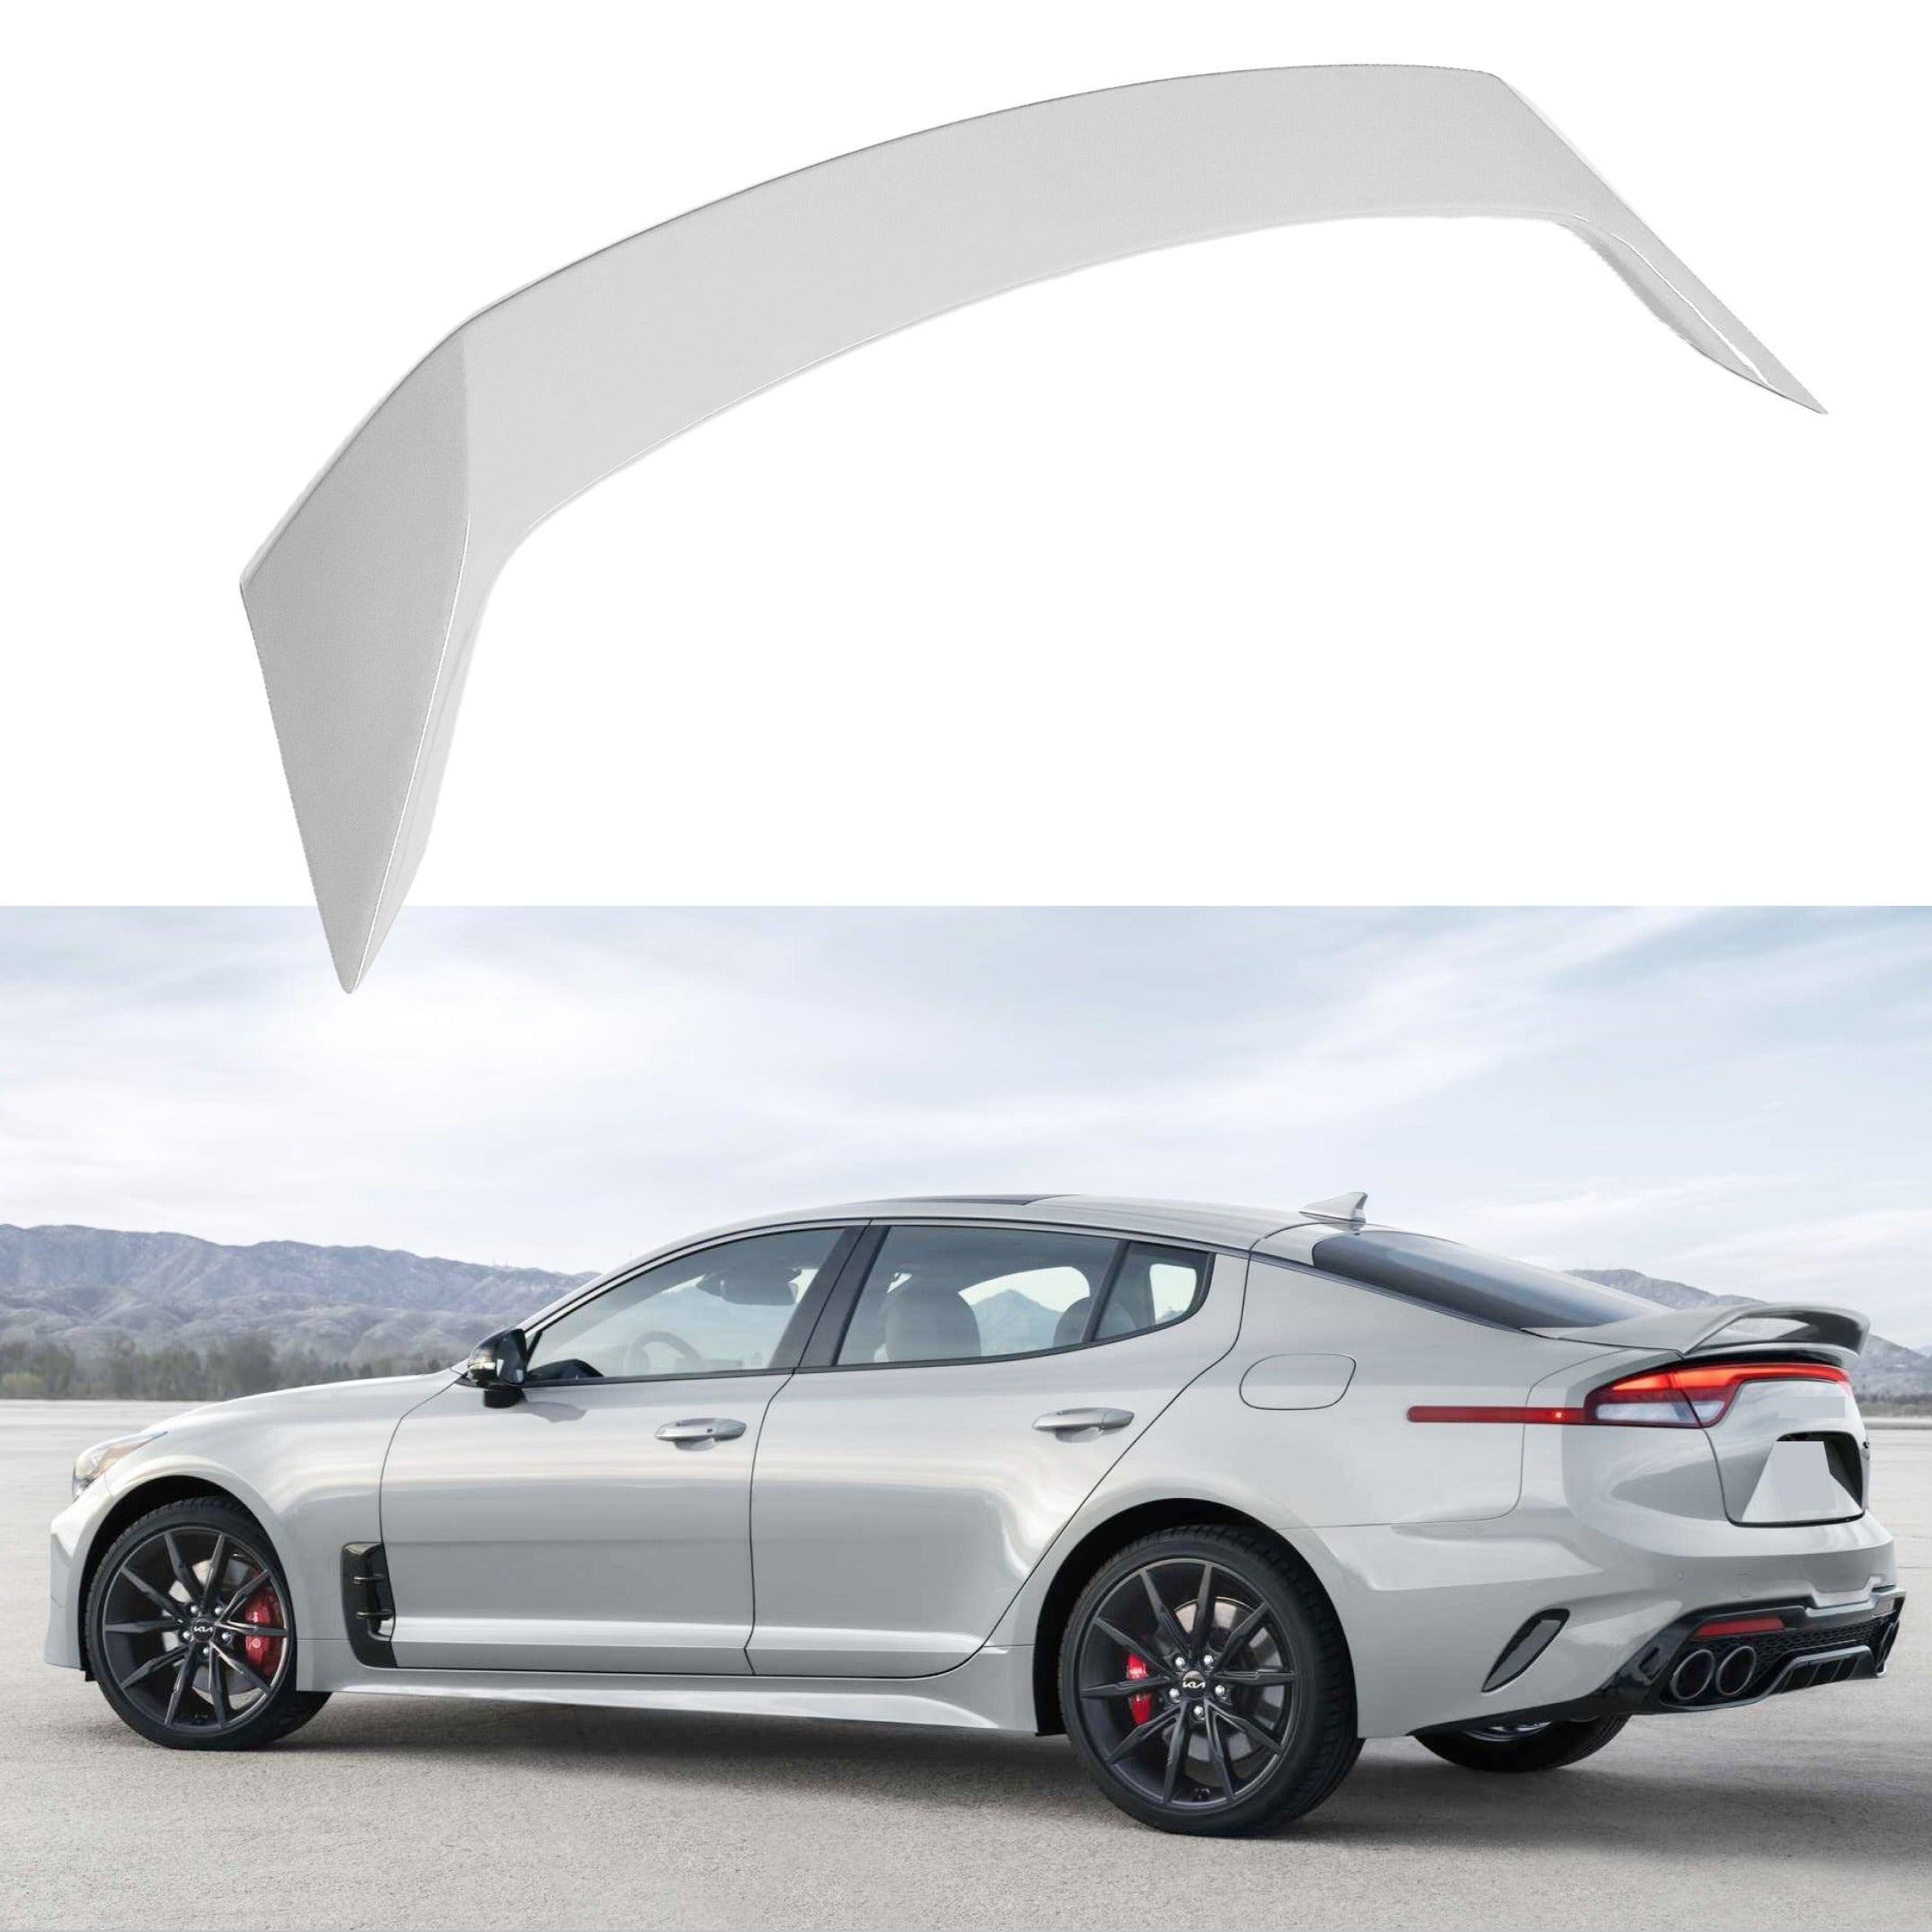 Ceramic Silver Metallic Scorpion GT Style Spoiler Wing on Fits Kia Stinger 2018-2023, enhancing the car's aerodynamics as a rear spoiler